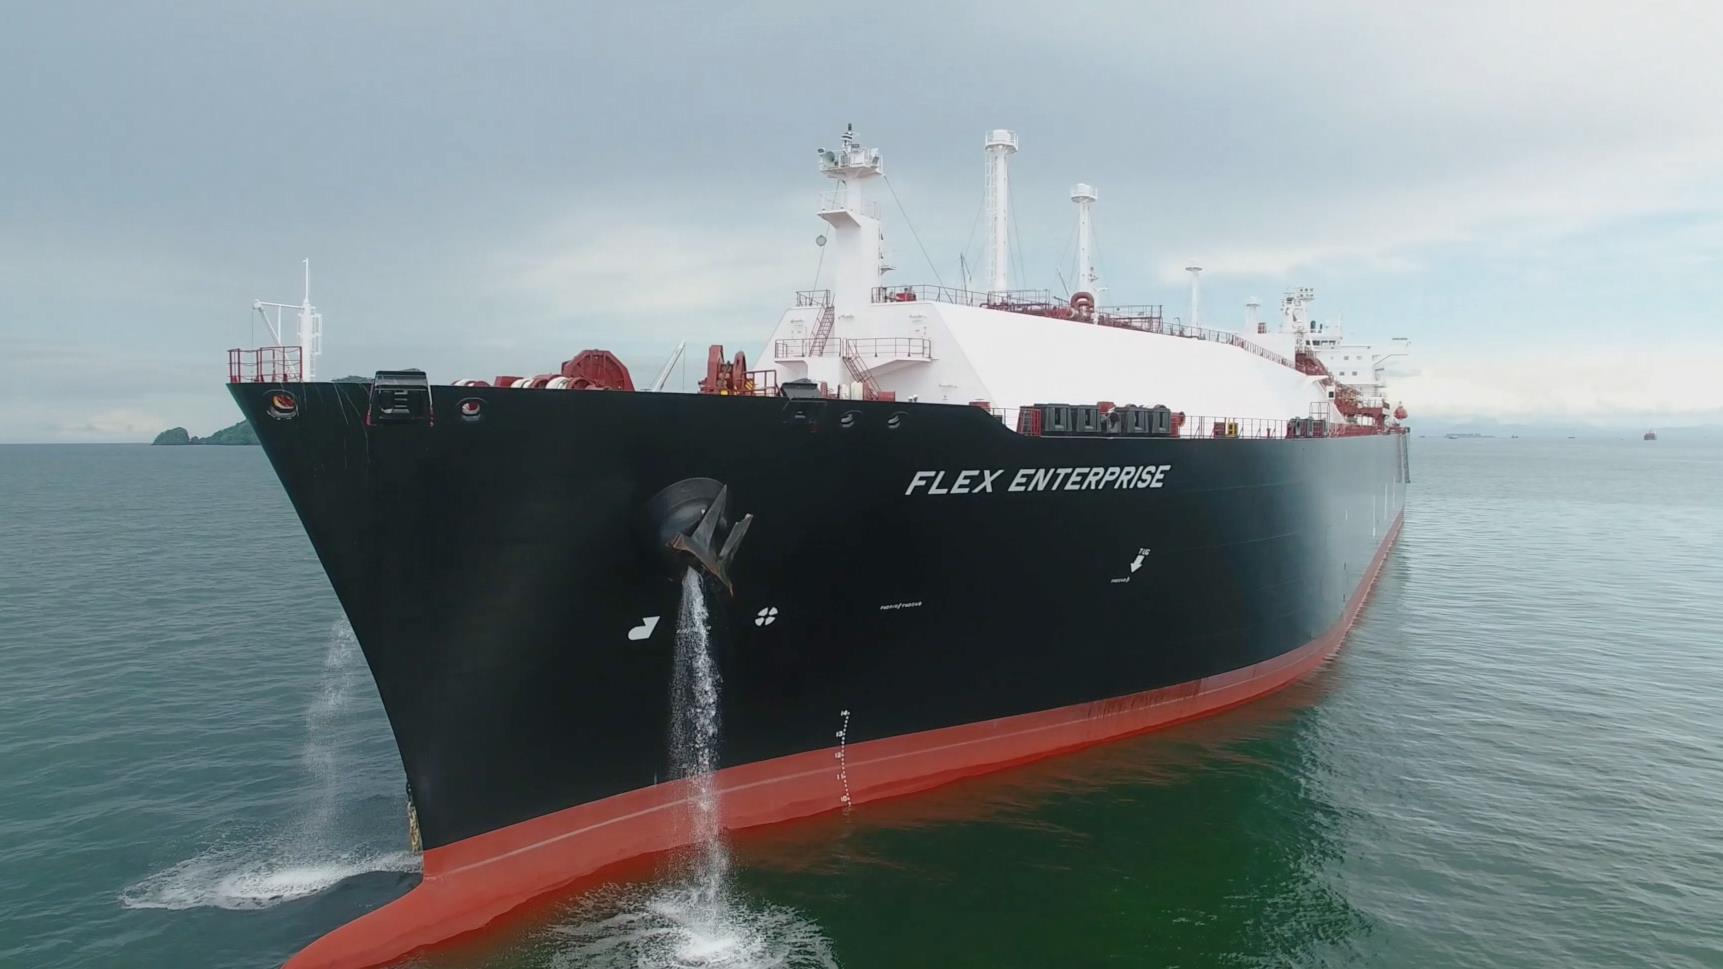 Flex LNG raises revenue guidance after new charter deals